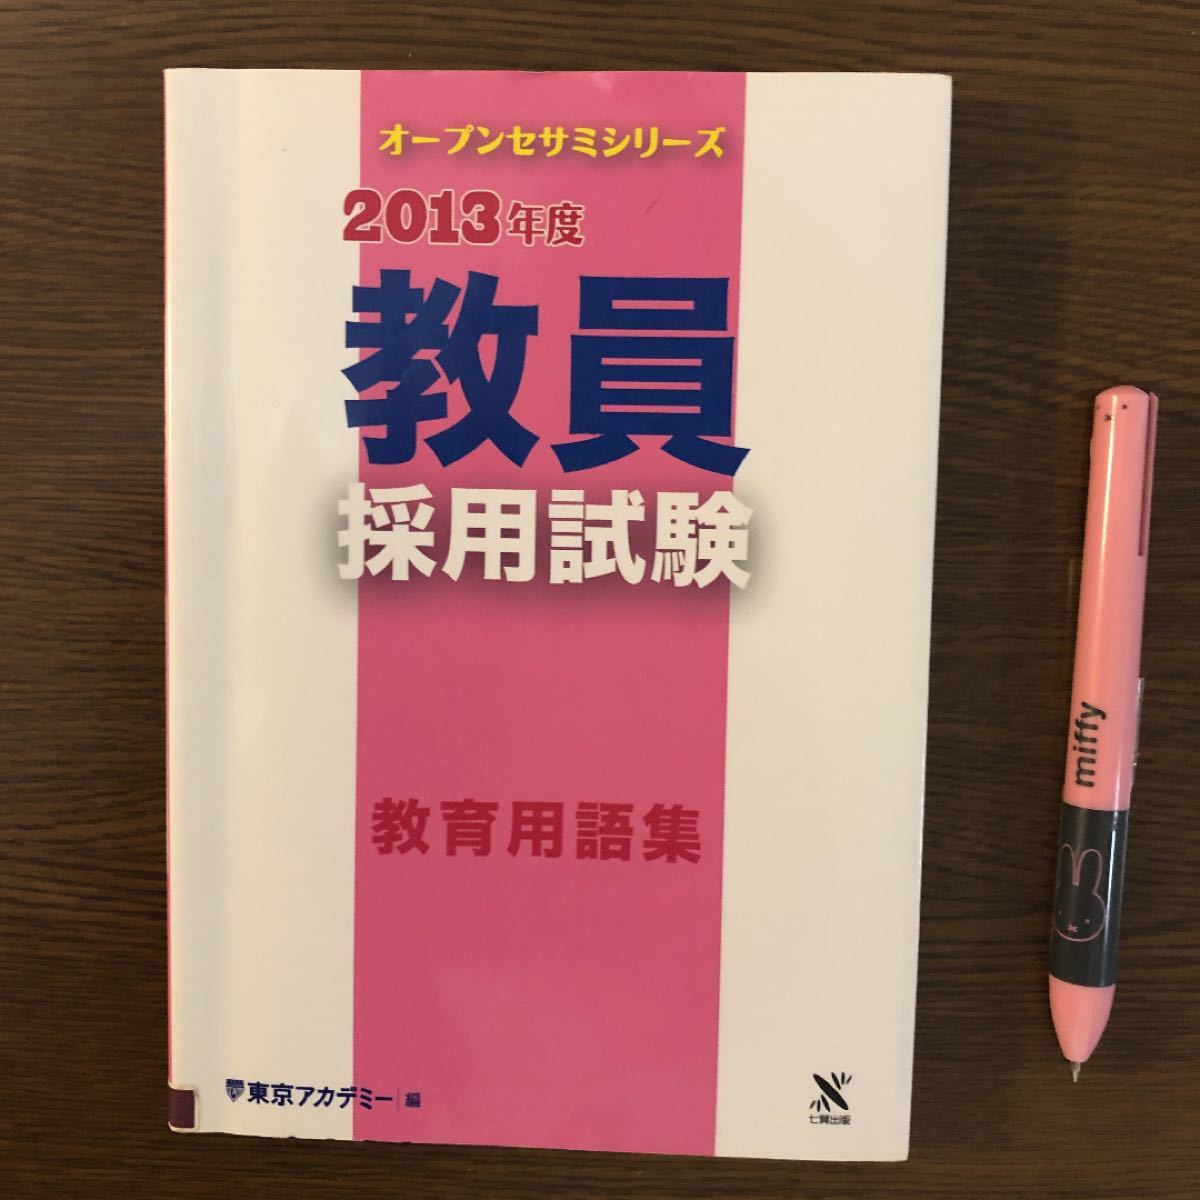 （JP25）教育用語集 [2013年度]【除籍本】